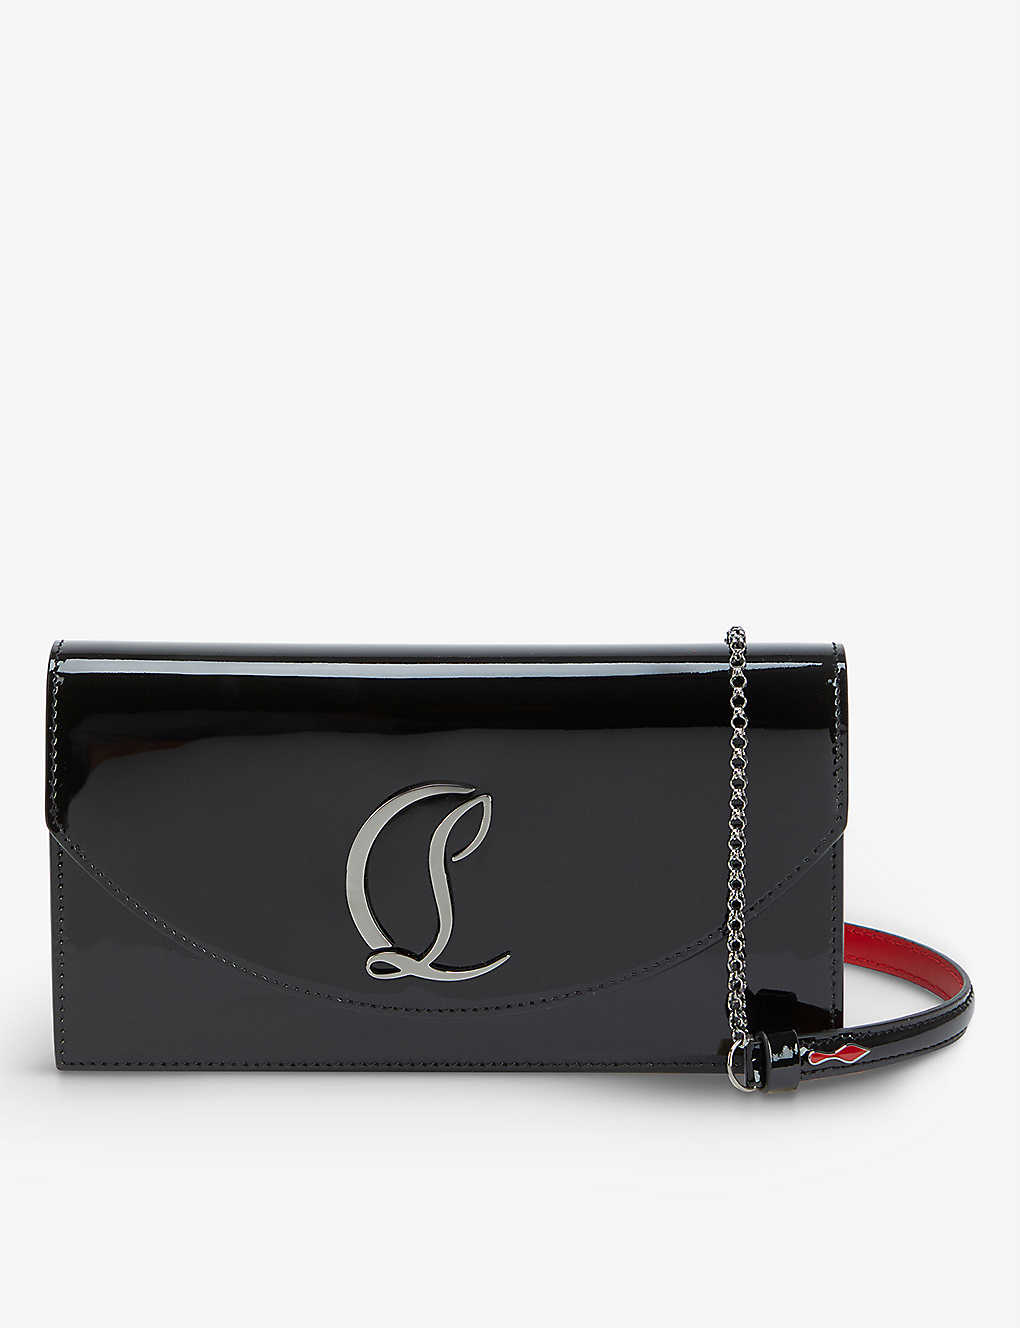 Shop Christian Louboutin Womens Black/gun Metal Loubi54 Leather Clutch Bag